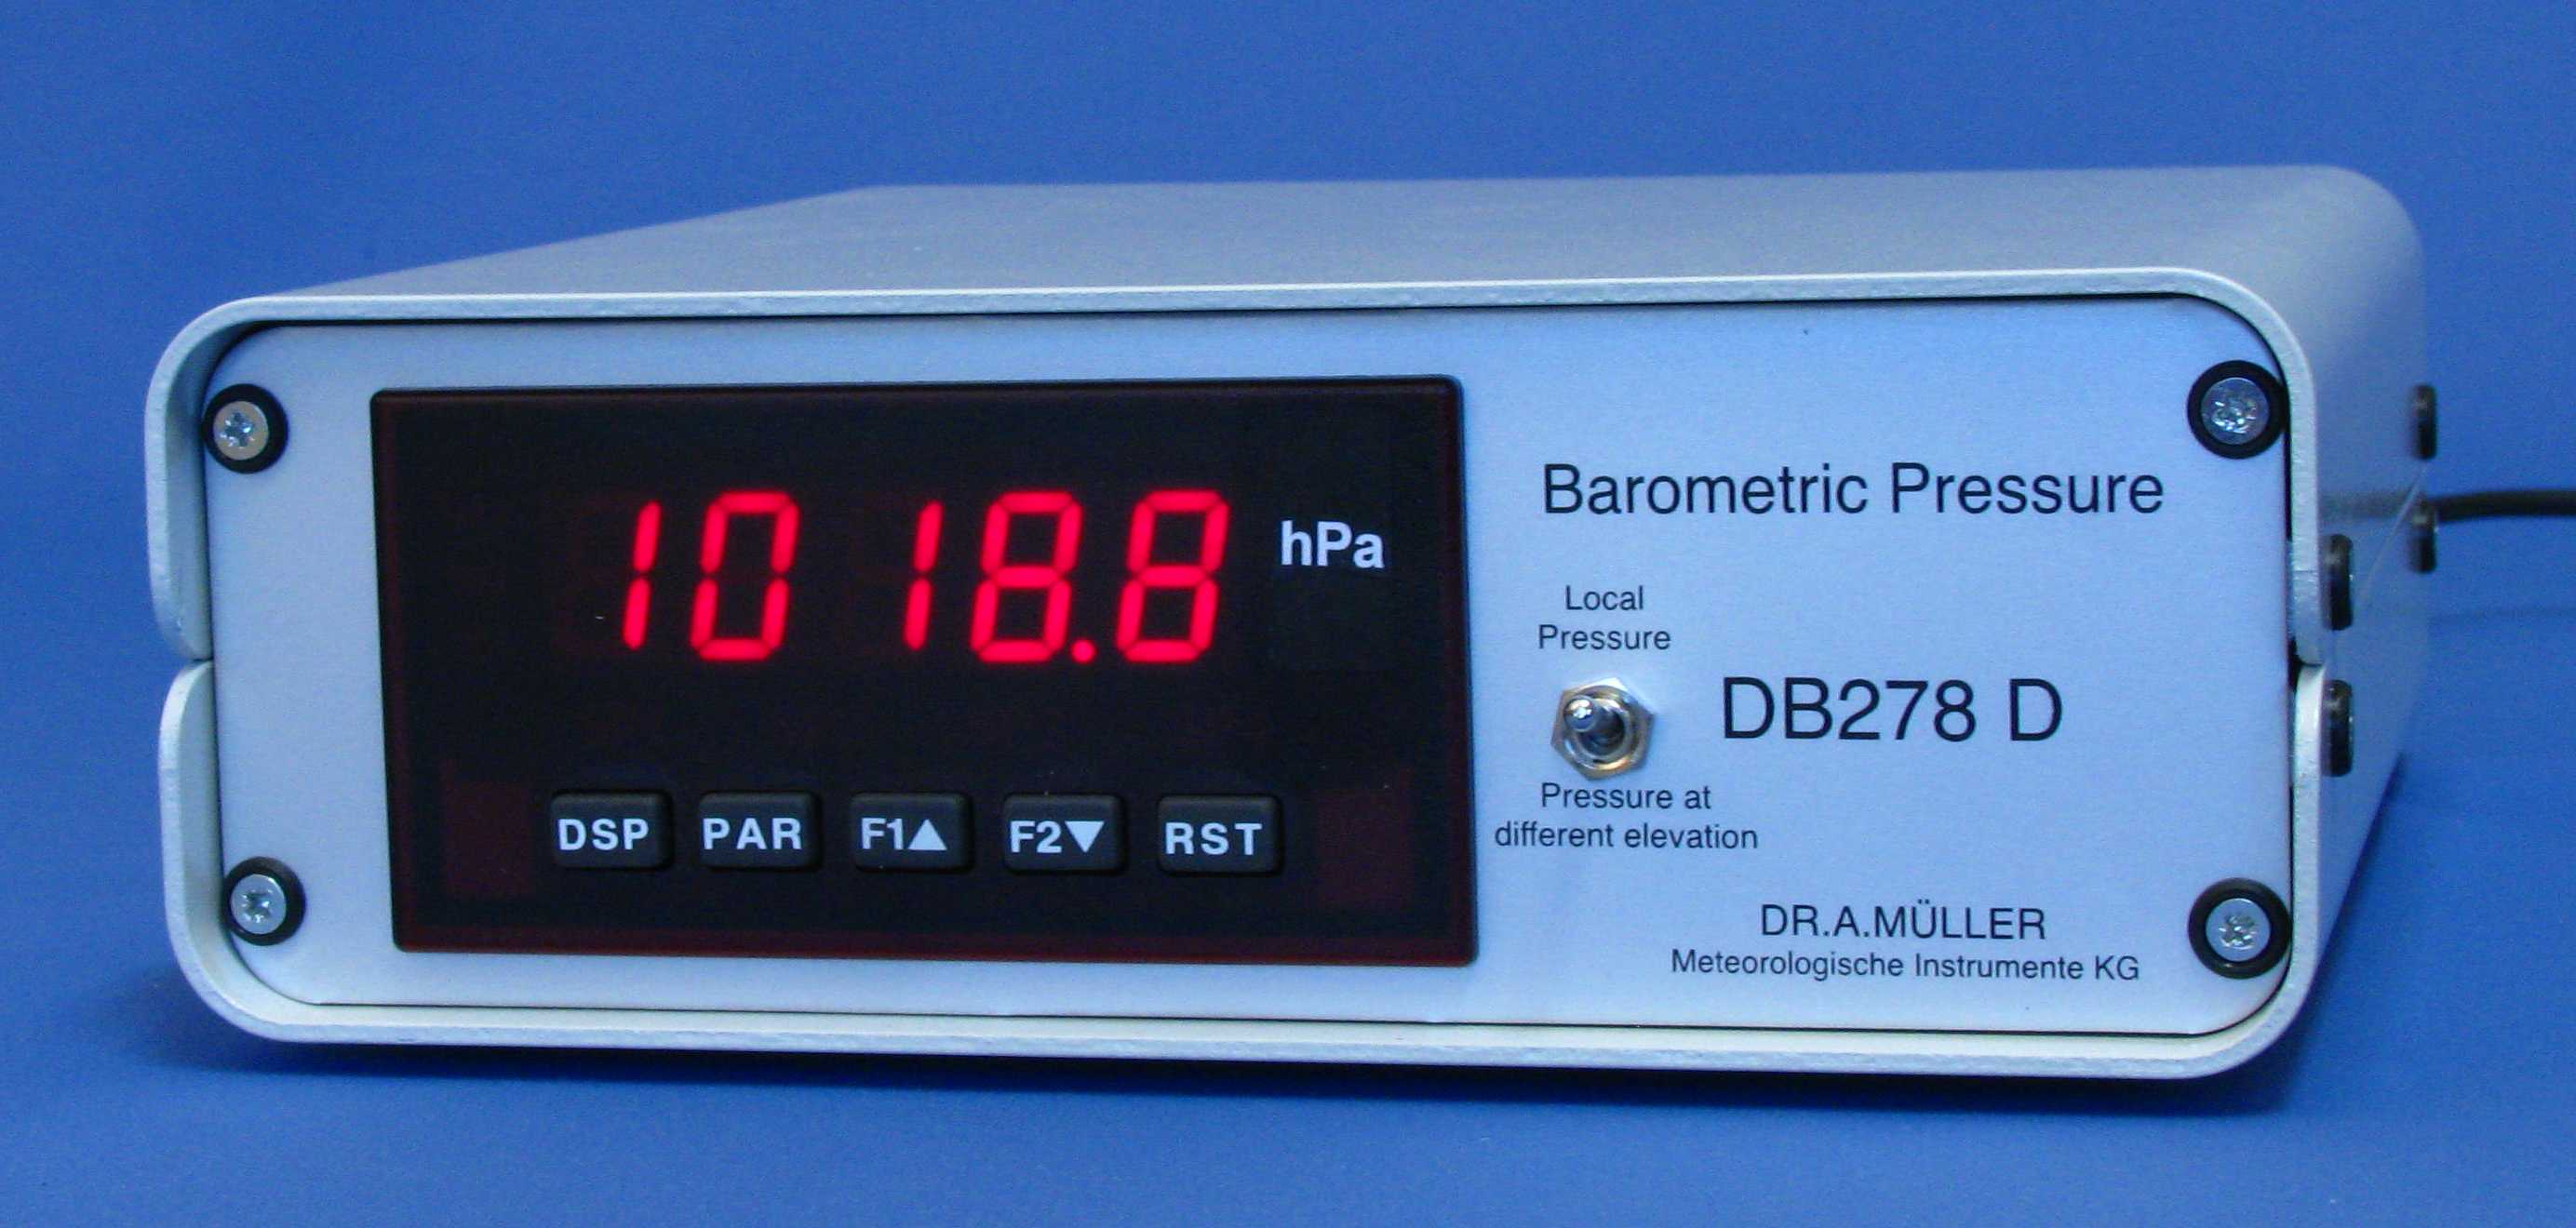 Digital barometer of a world class quality